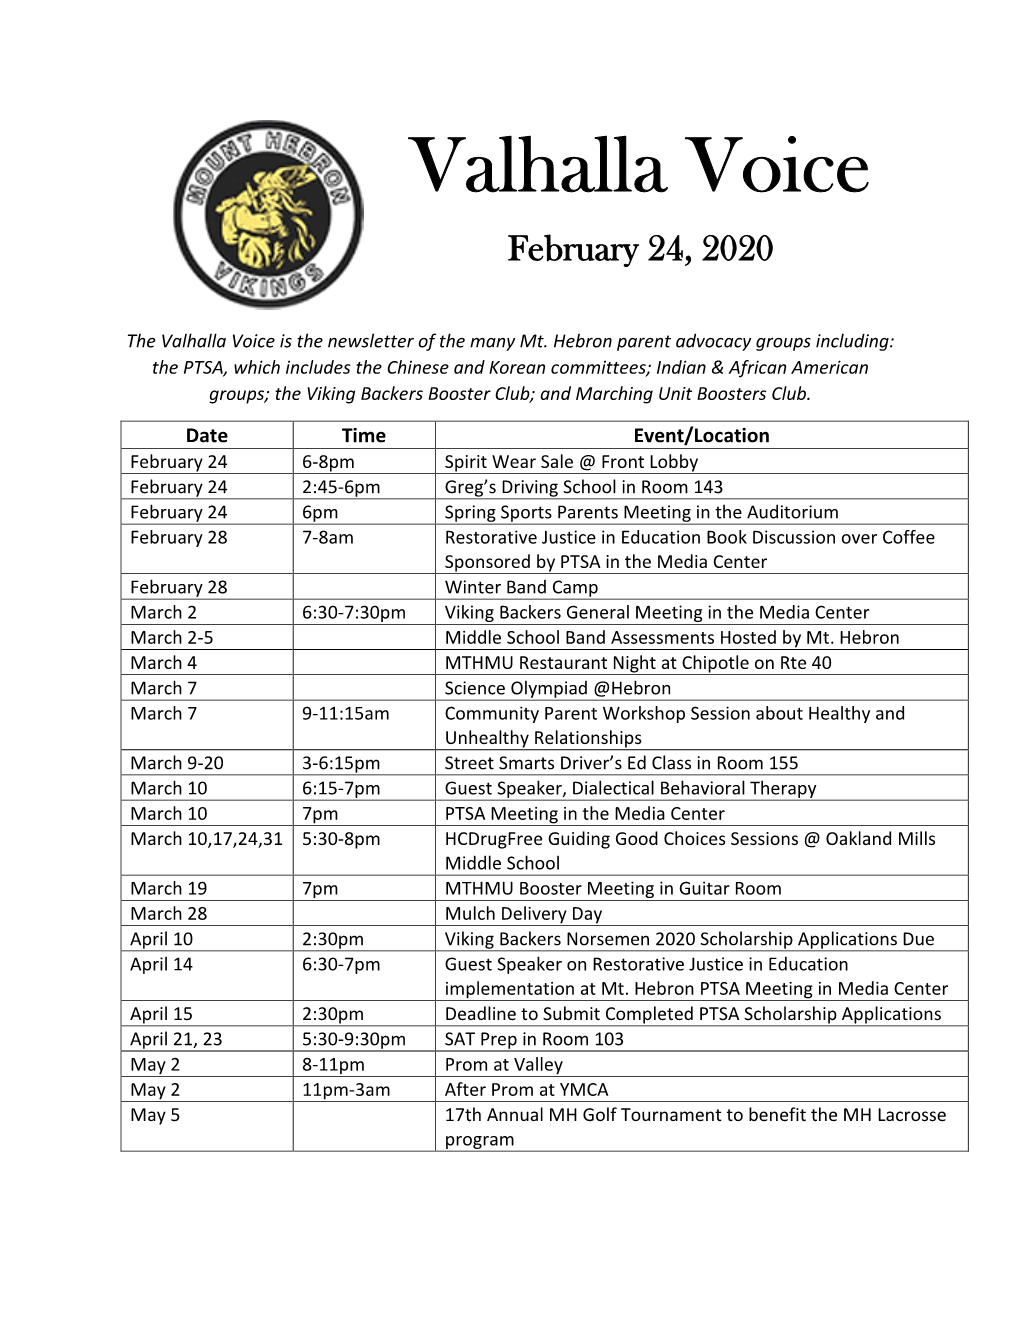 Valhalla Voice February 24, 2020